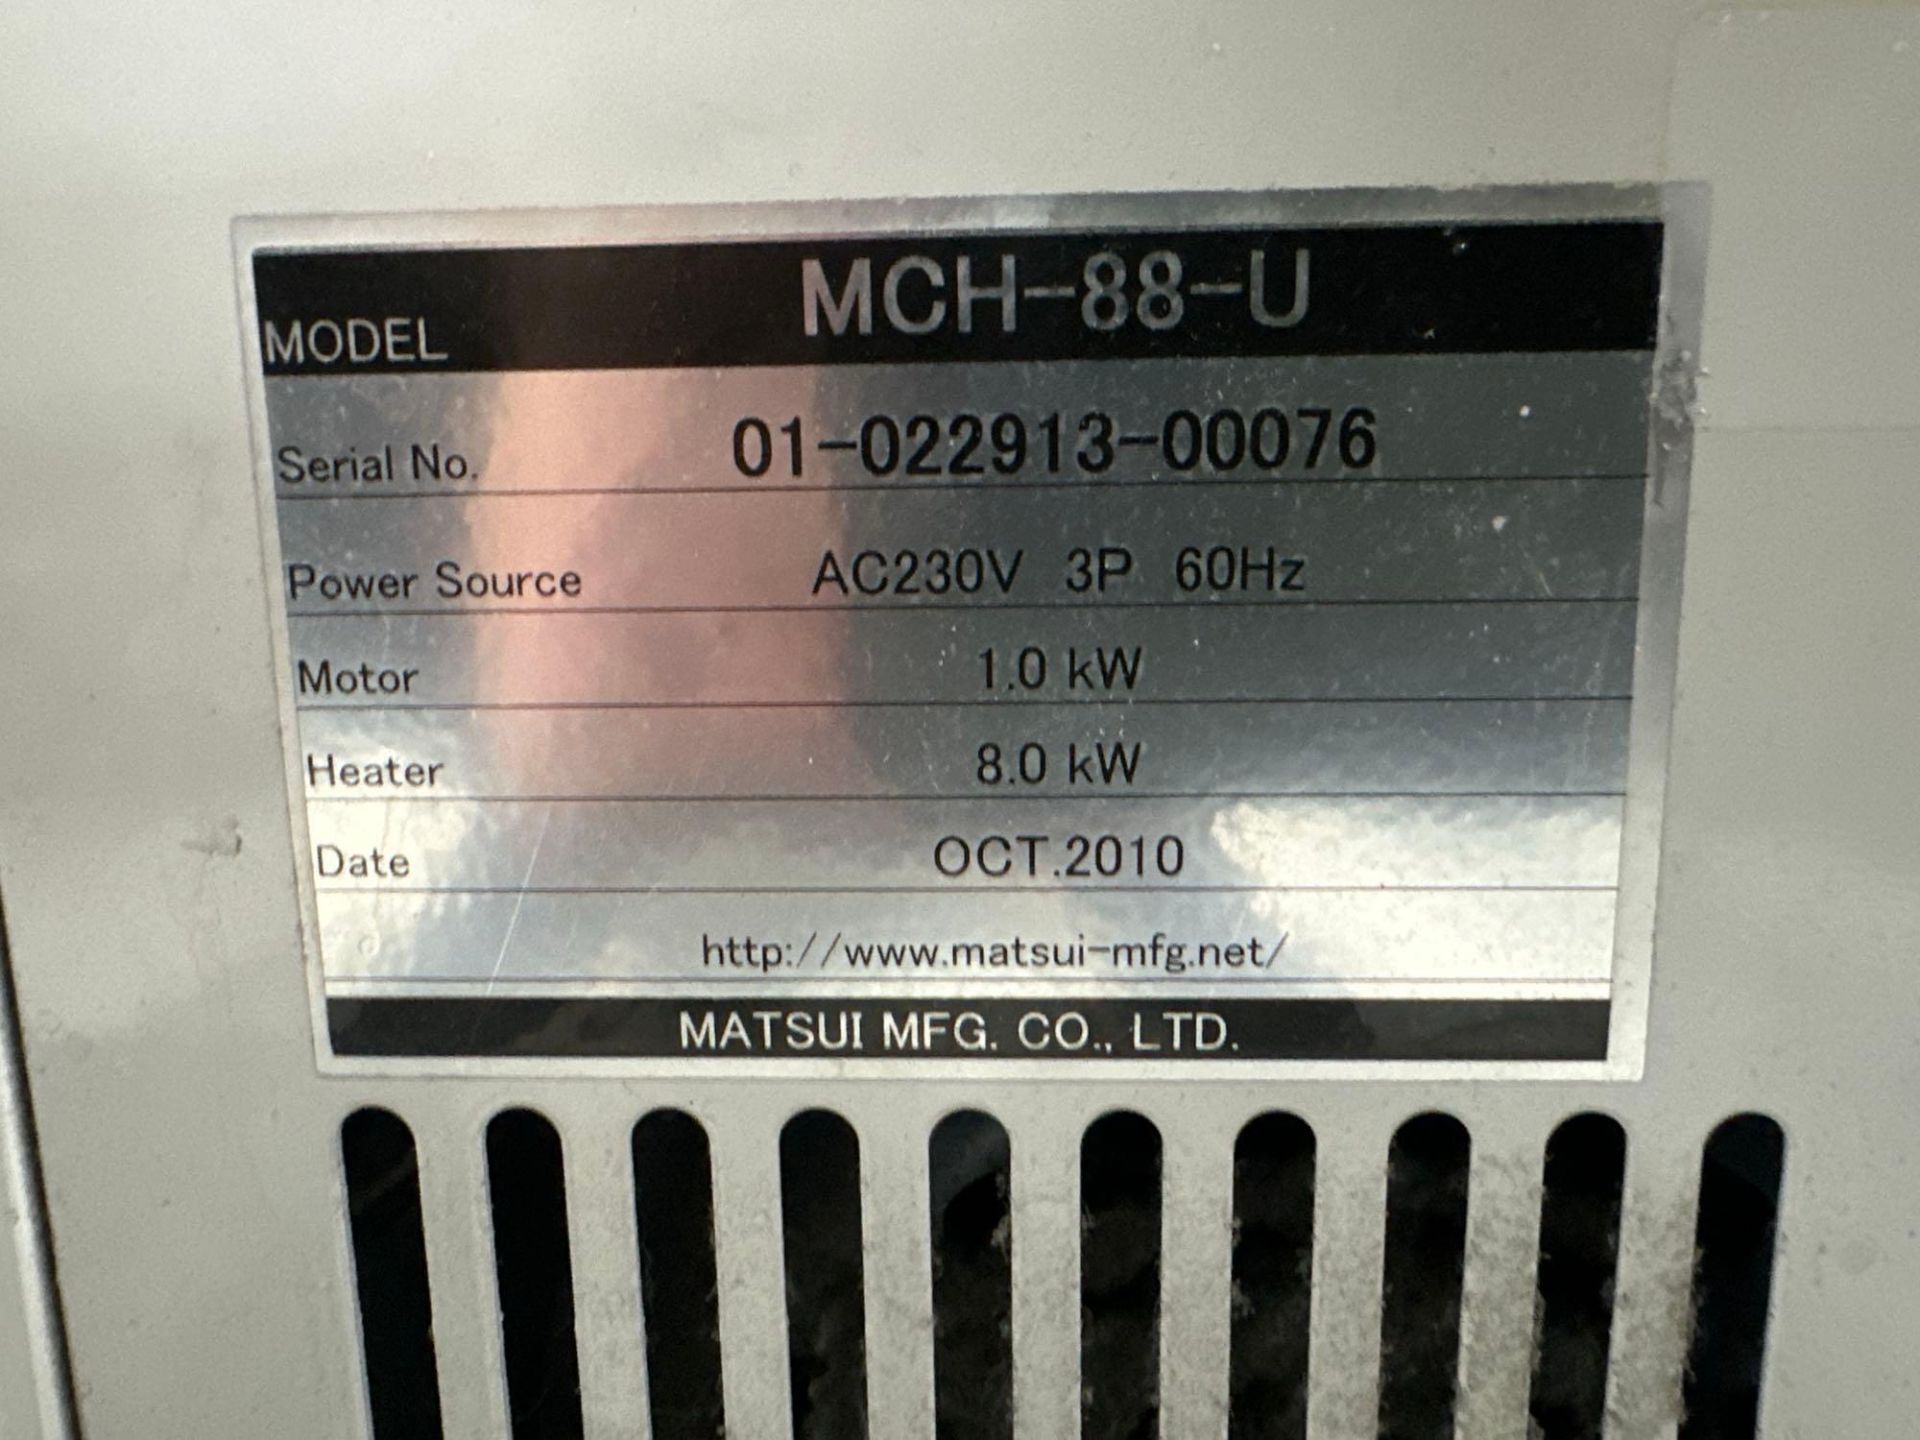 Matsui MCH-88-U Thermolator, 1.3hp, 8kw, 24gpm, 57psi, 248f, s/n 01-022913- 00076 - Image 4 of 4